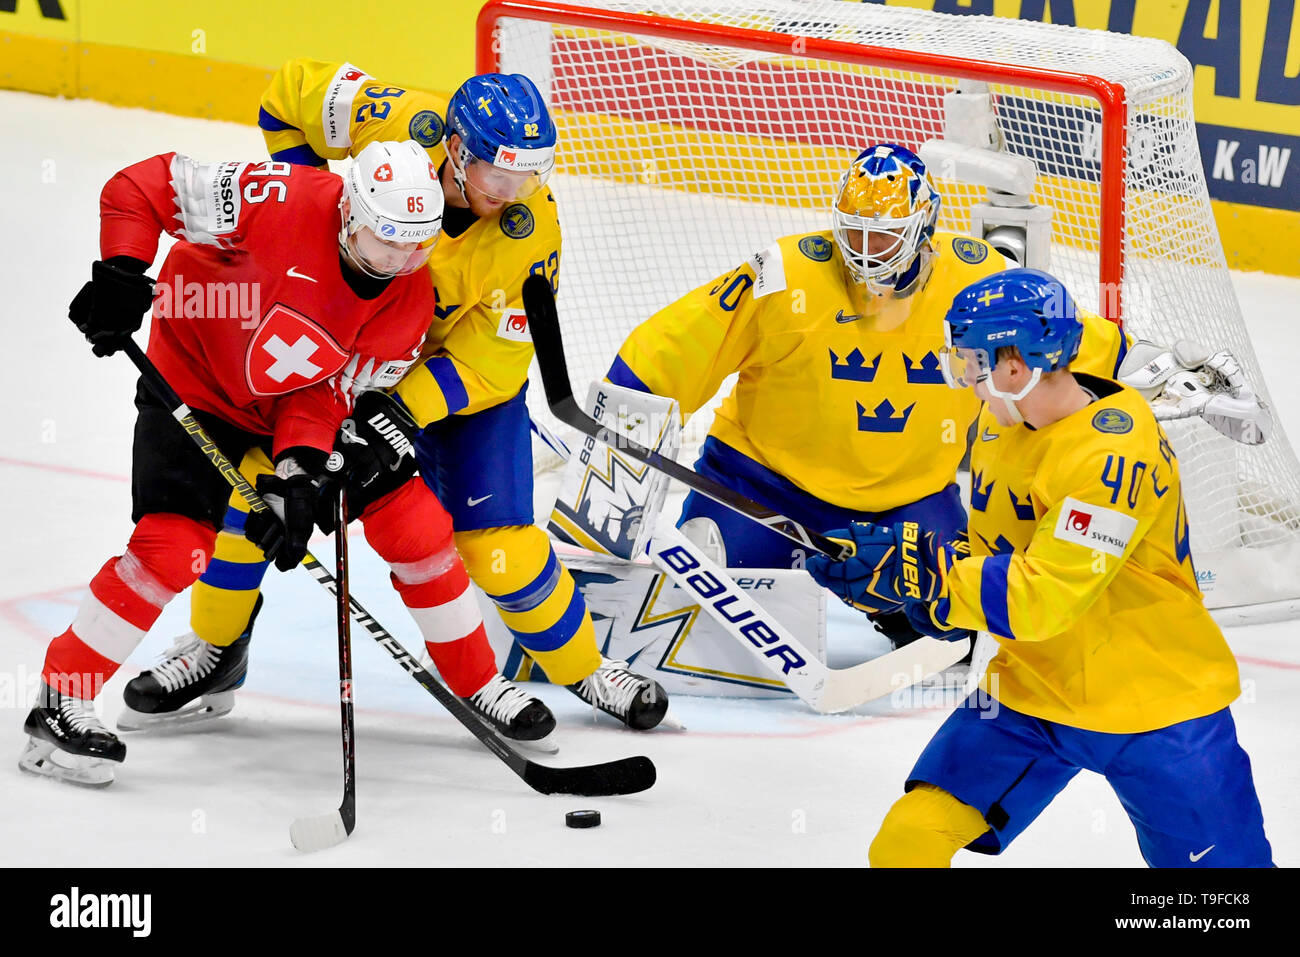 The Henrik Lundqvist Blog: Henrik Lundqvist Wins Gold at the IIHF